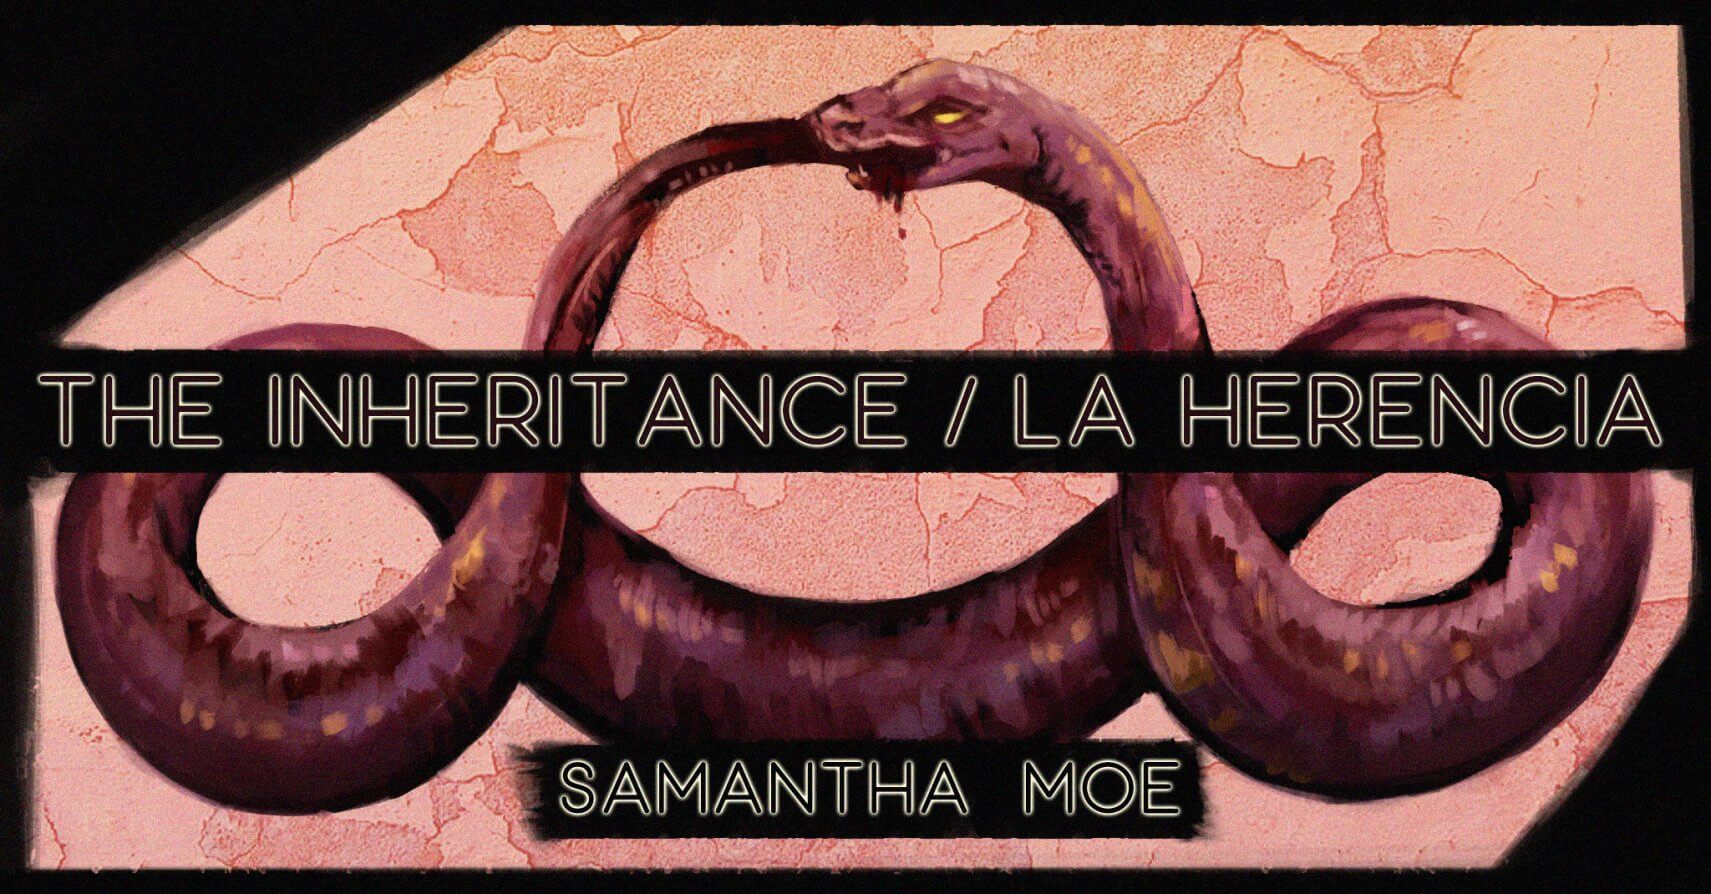 THE INHERITENCE / LA HERENCIA by Sam Moe